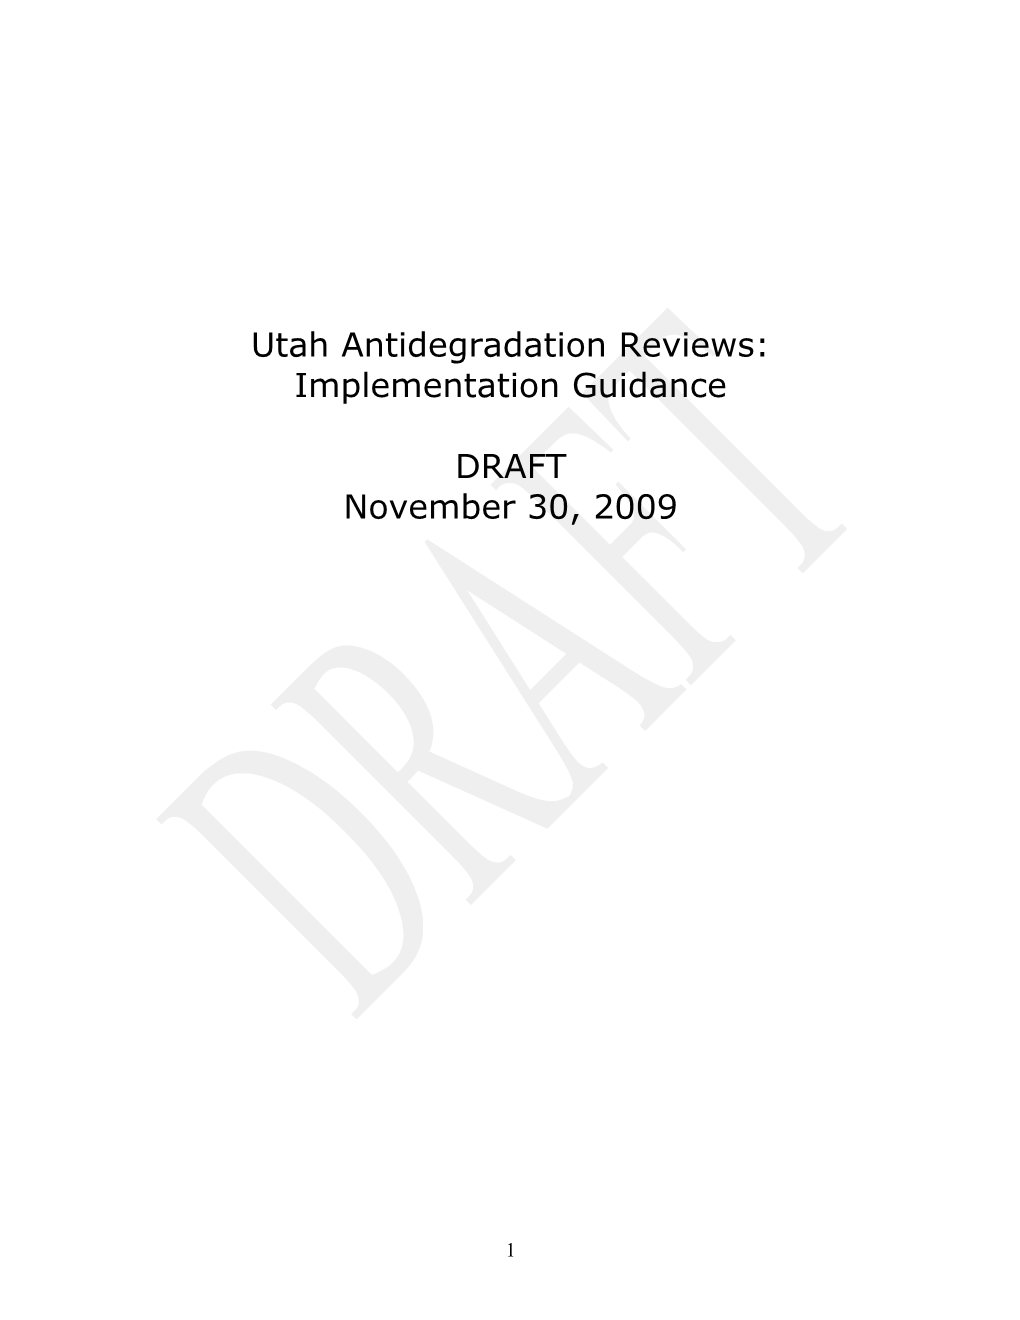 Utah Antidegradation Reviews: Implementation Guidance